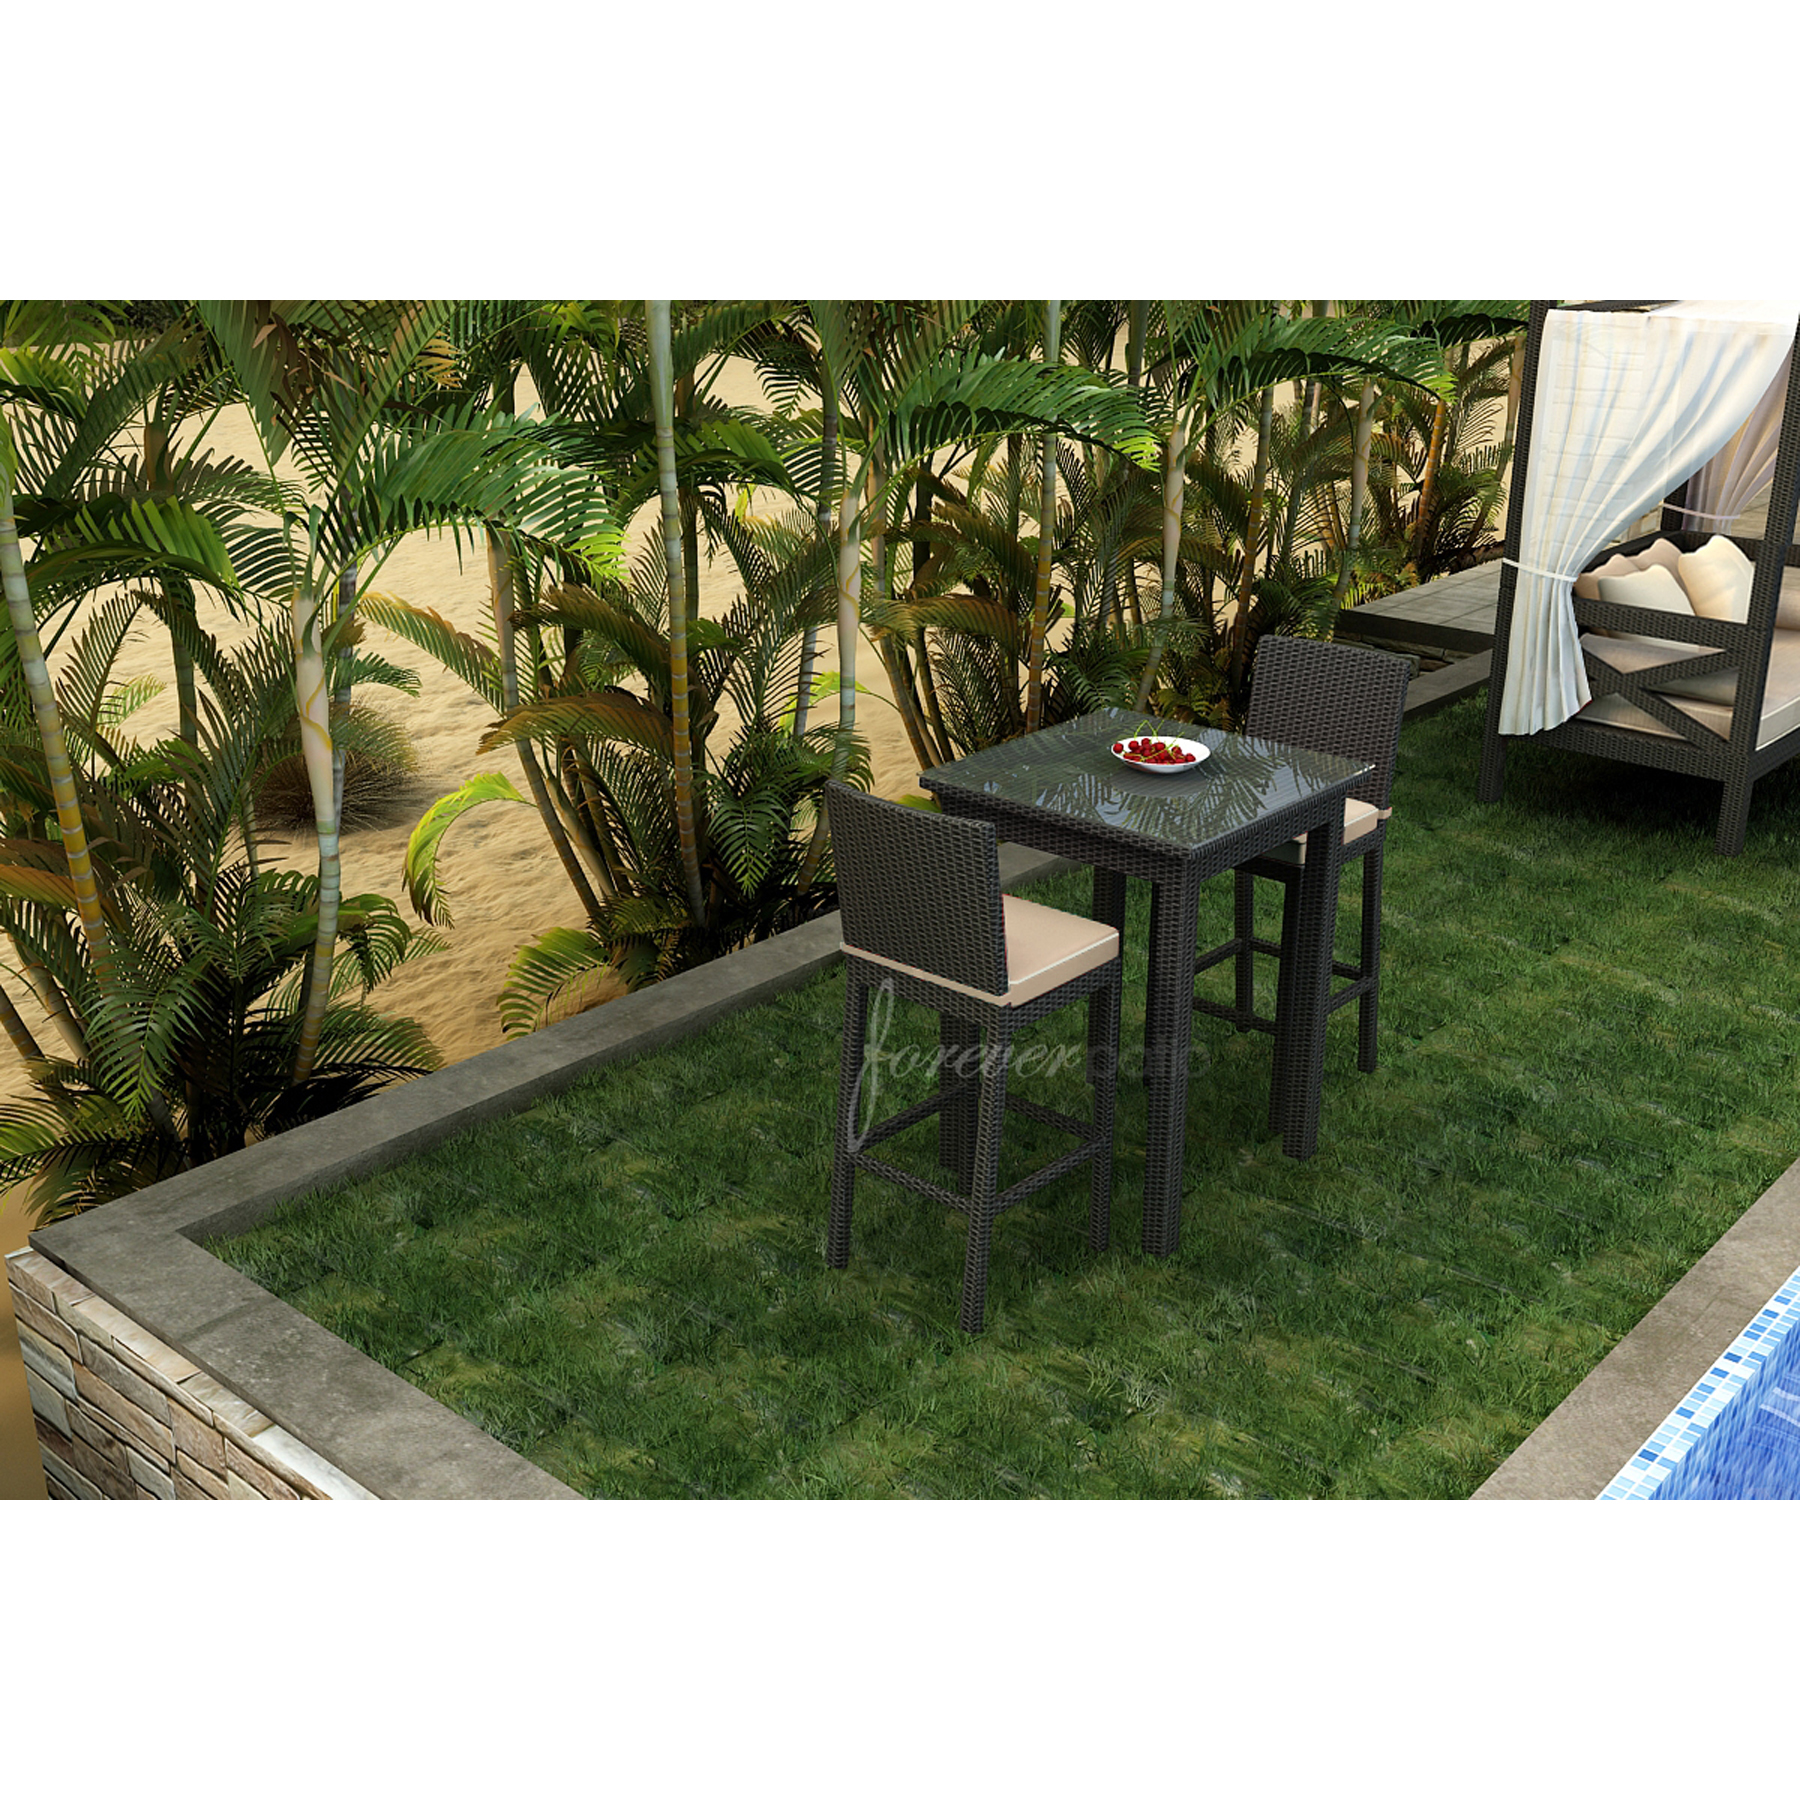 Barbados 3pc Bar Height Outdoor Patio Bar Set, with Sunbrella&reg; Spectrum Mushroom Cushions